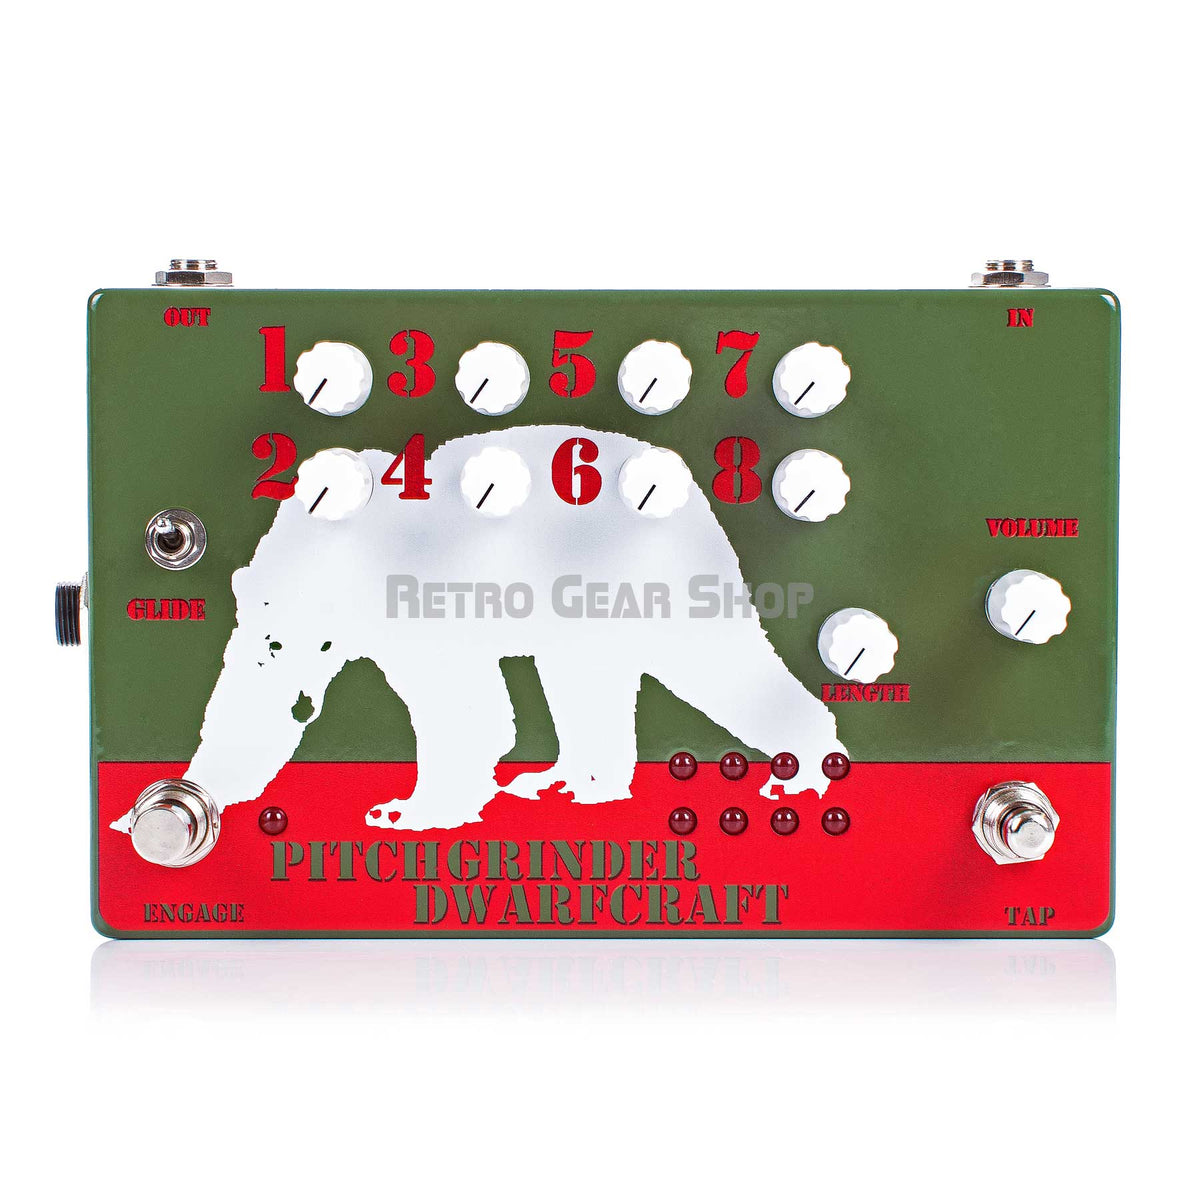 Dwarfcraft Devices boutique handmade guitar effect pedals – Retro